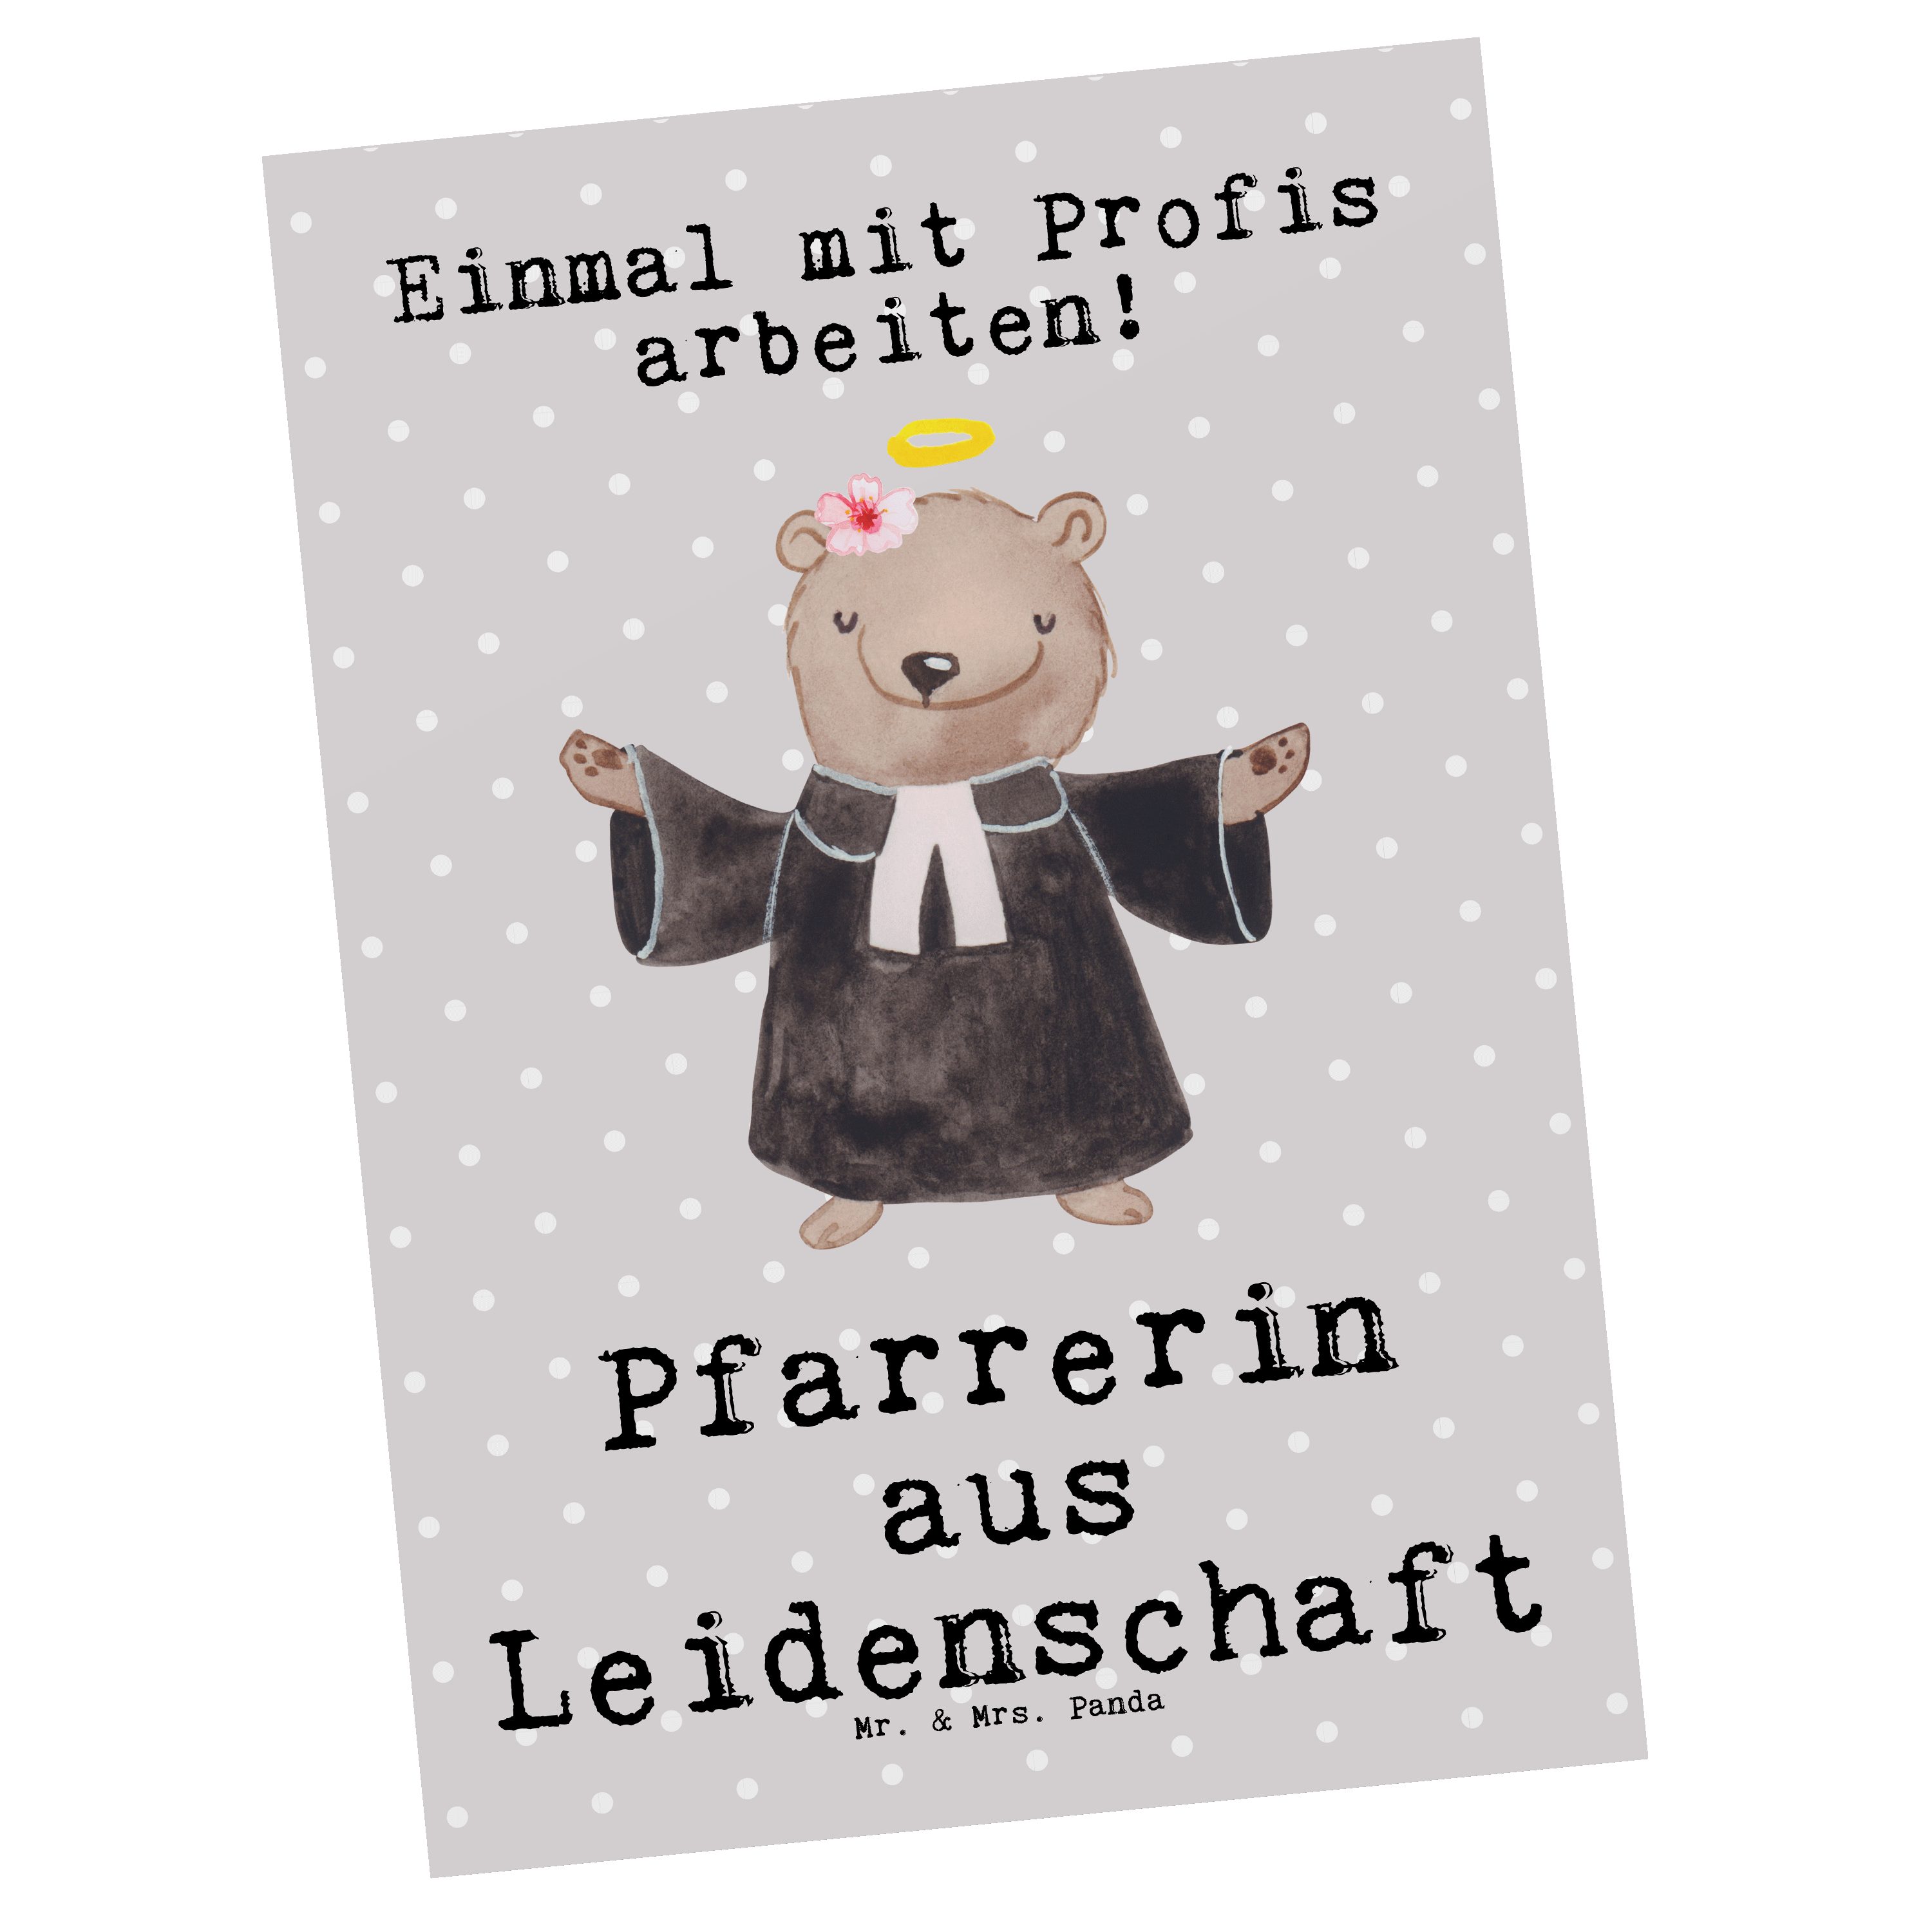 Mr. & Mrs. Panda Postkarte Pfarrerin aus Leidenschaft - Grau Pastell - Geschenk, Dankeschön, Ein